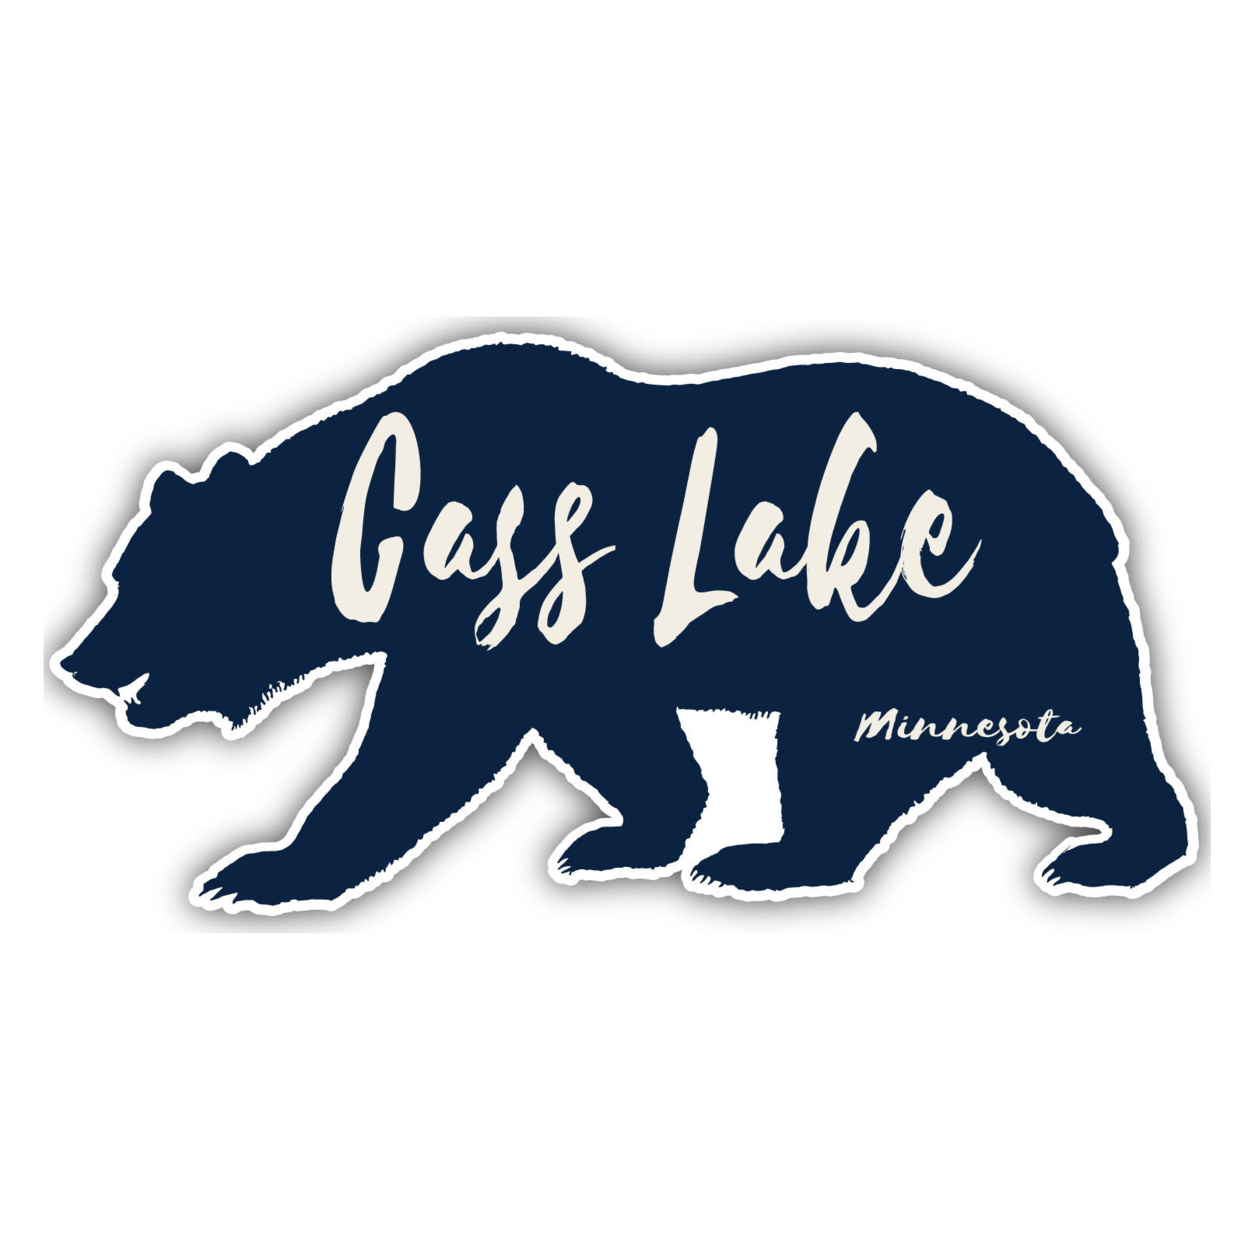 Cass Lake Minnesota Souvenir Decorative Stickers (Choose Theme And Size) - 4-Pack, 6-Inch, Bear